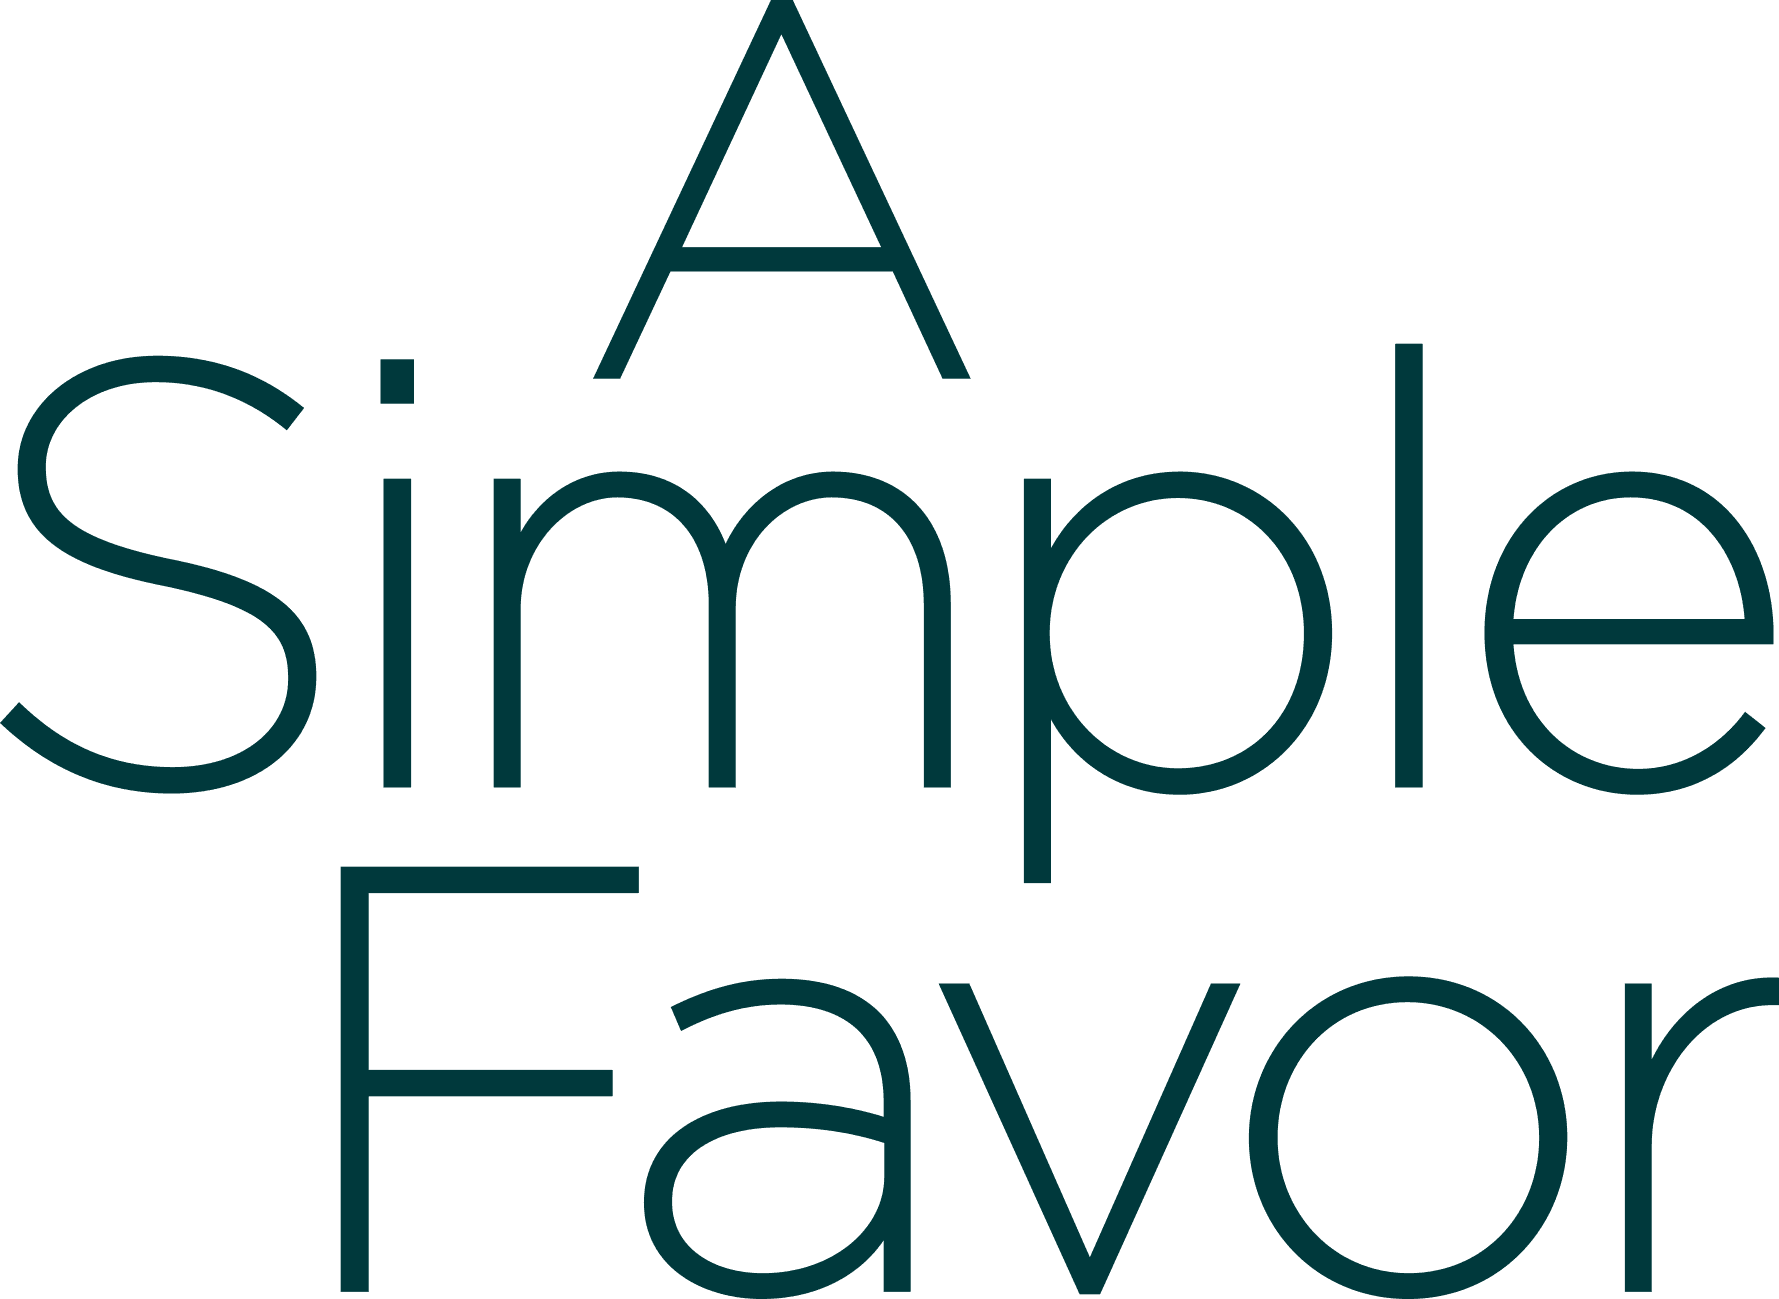 A Simple Favor logo